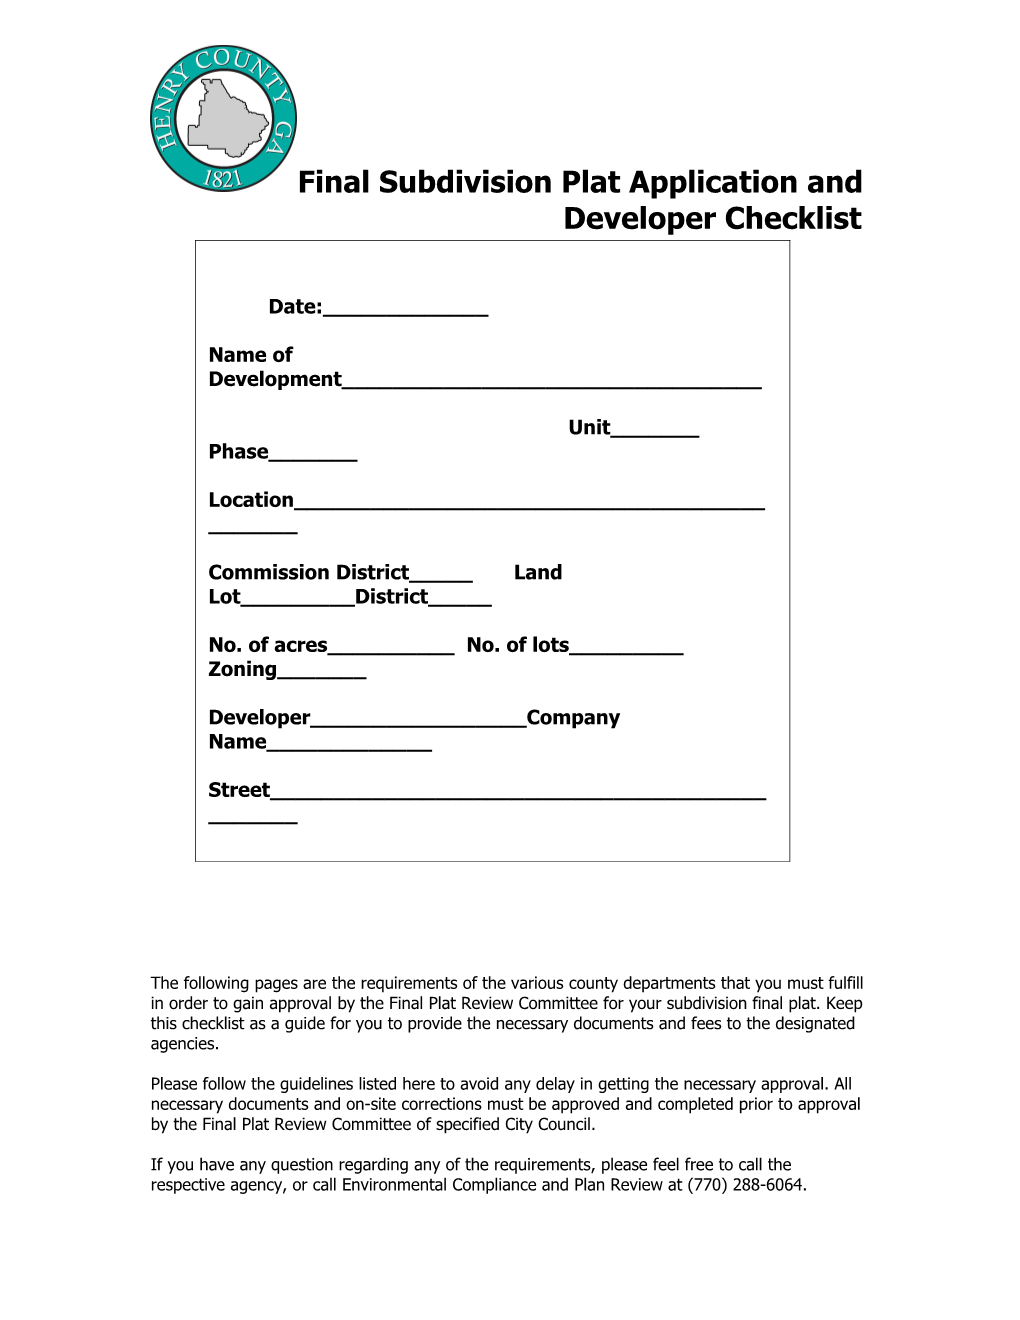 Final Subdivision Plat Application And